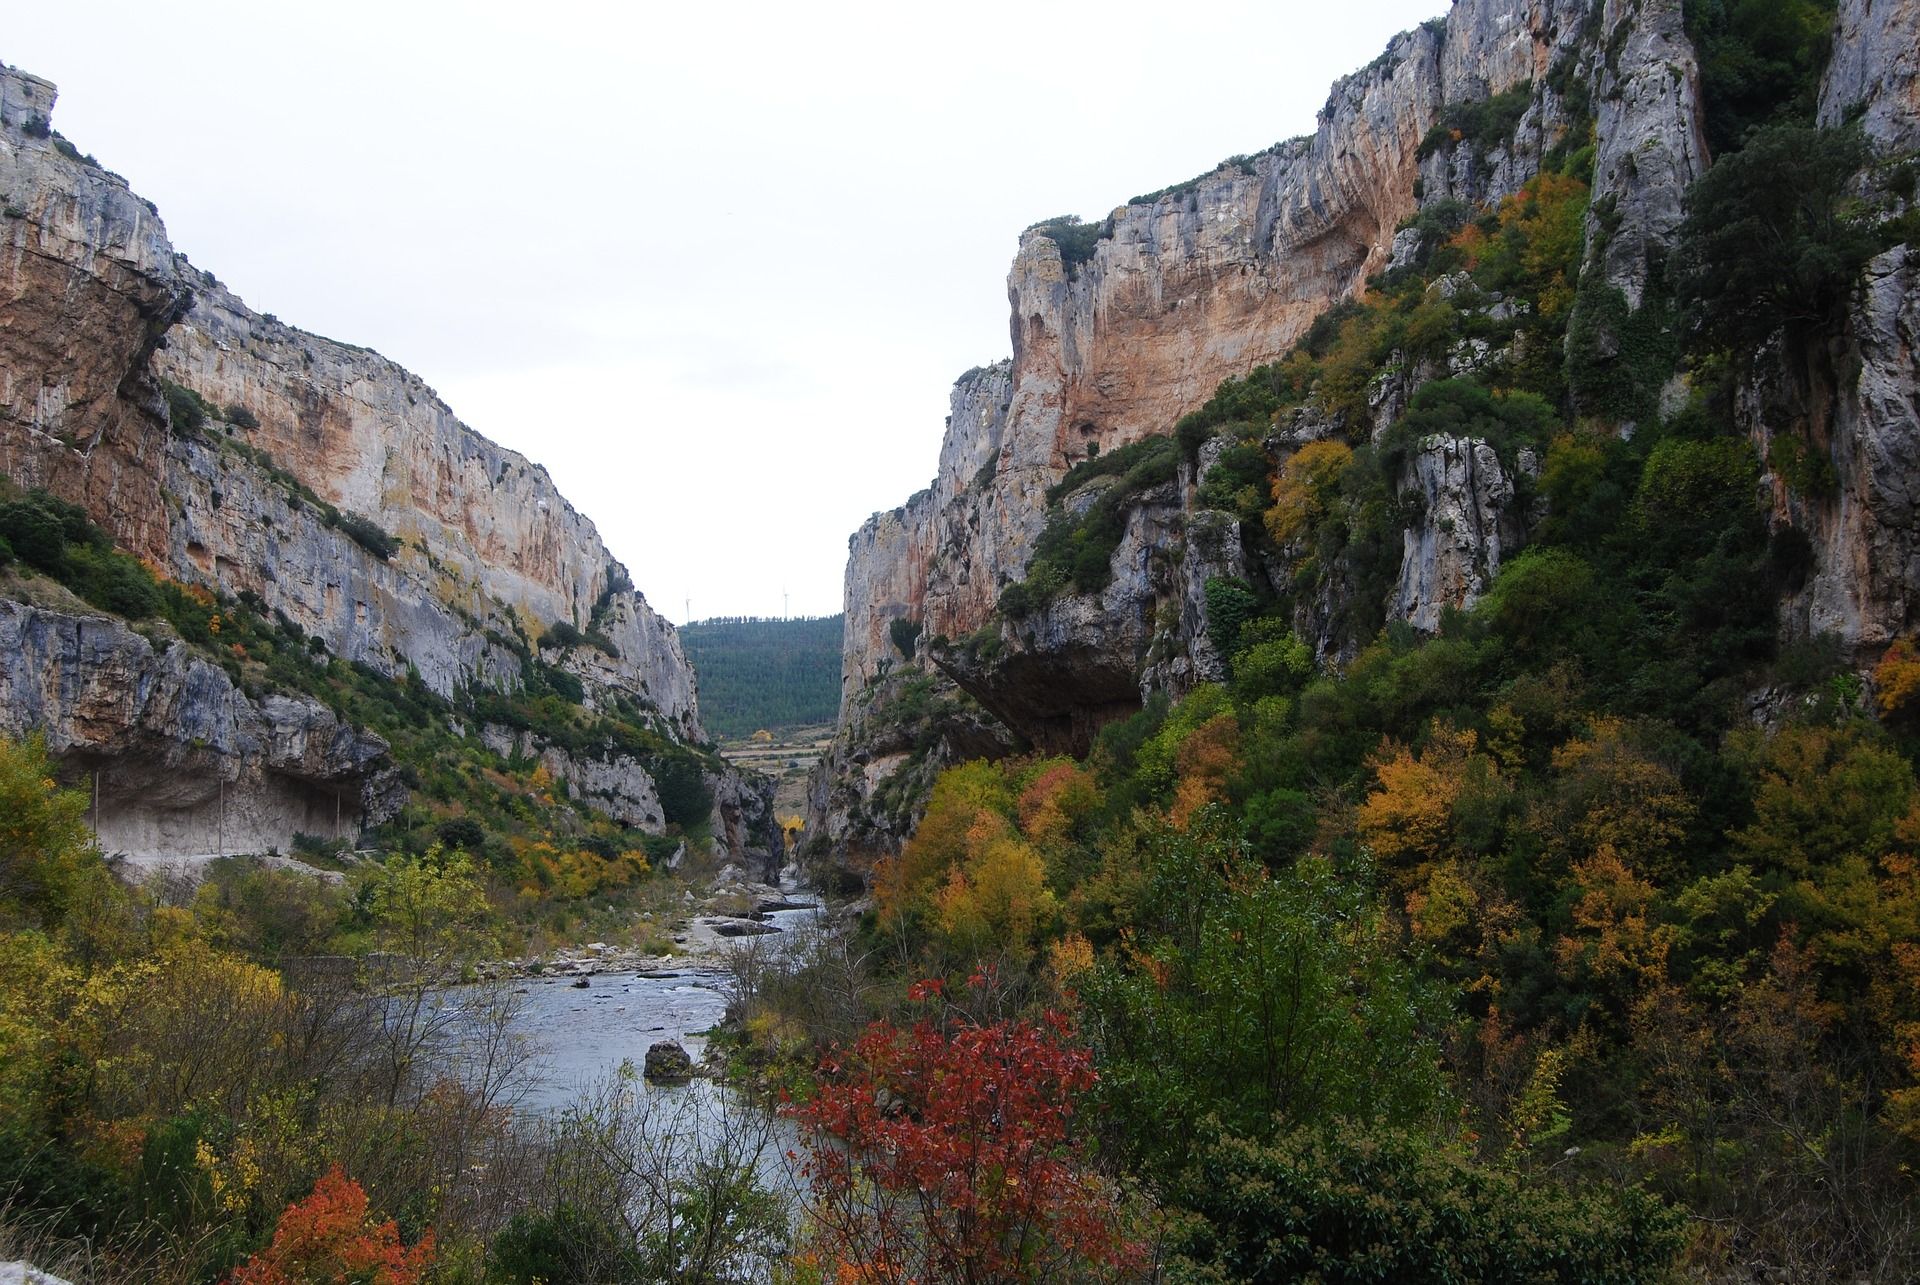 The Gorge of Arbaiun in Navarre, Spain